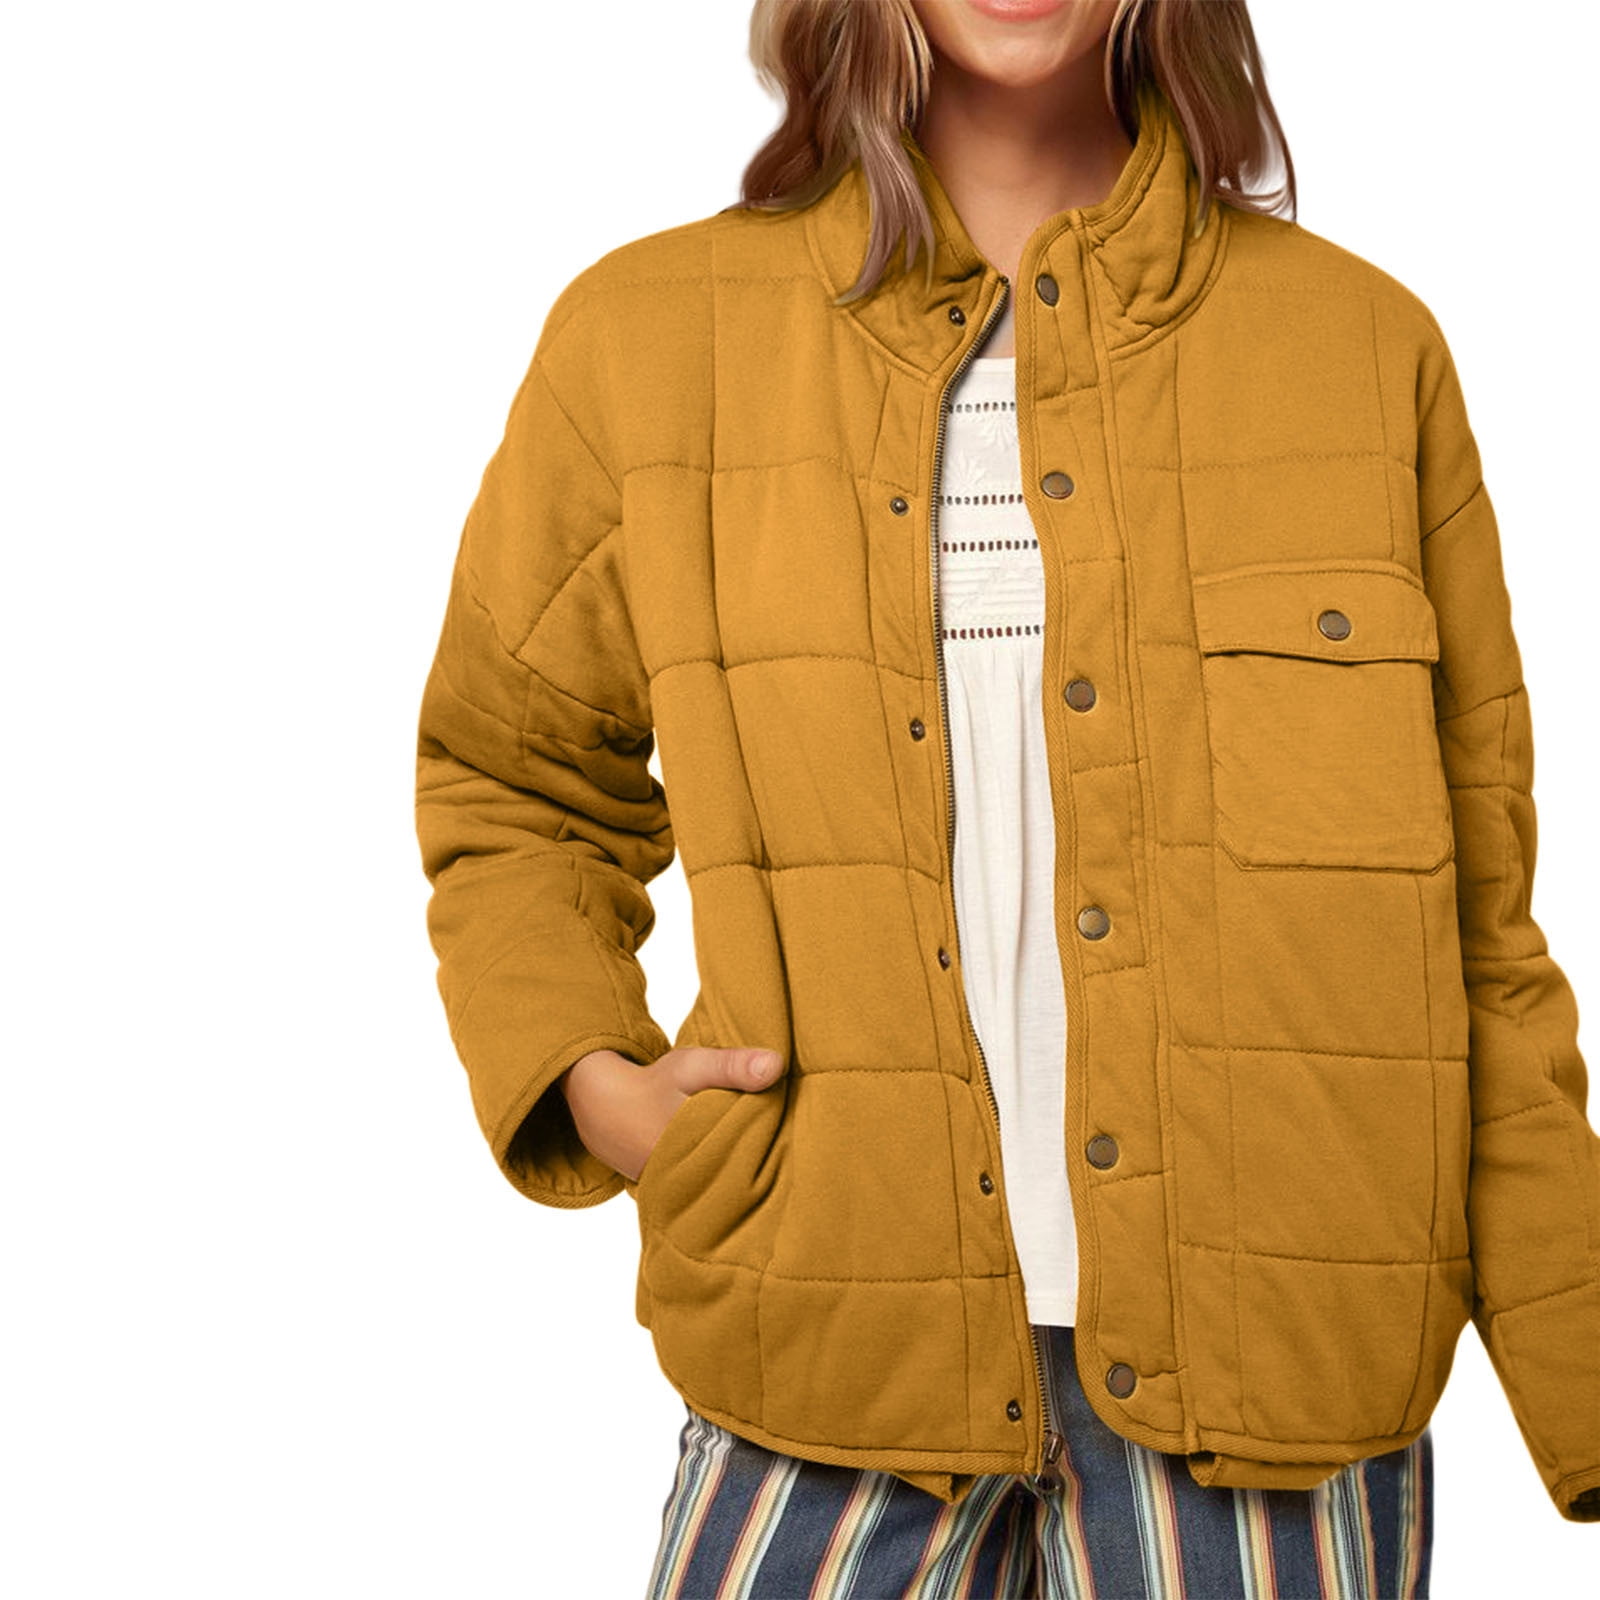 Aayomet Coats For Women Women's Waterproof Ski Jacket Warm Winter Snow Coat  Mountain Windbreaker Hooded Raincoat Jacket,Yellow XL 